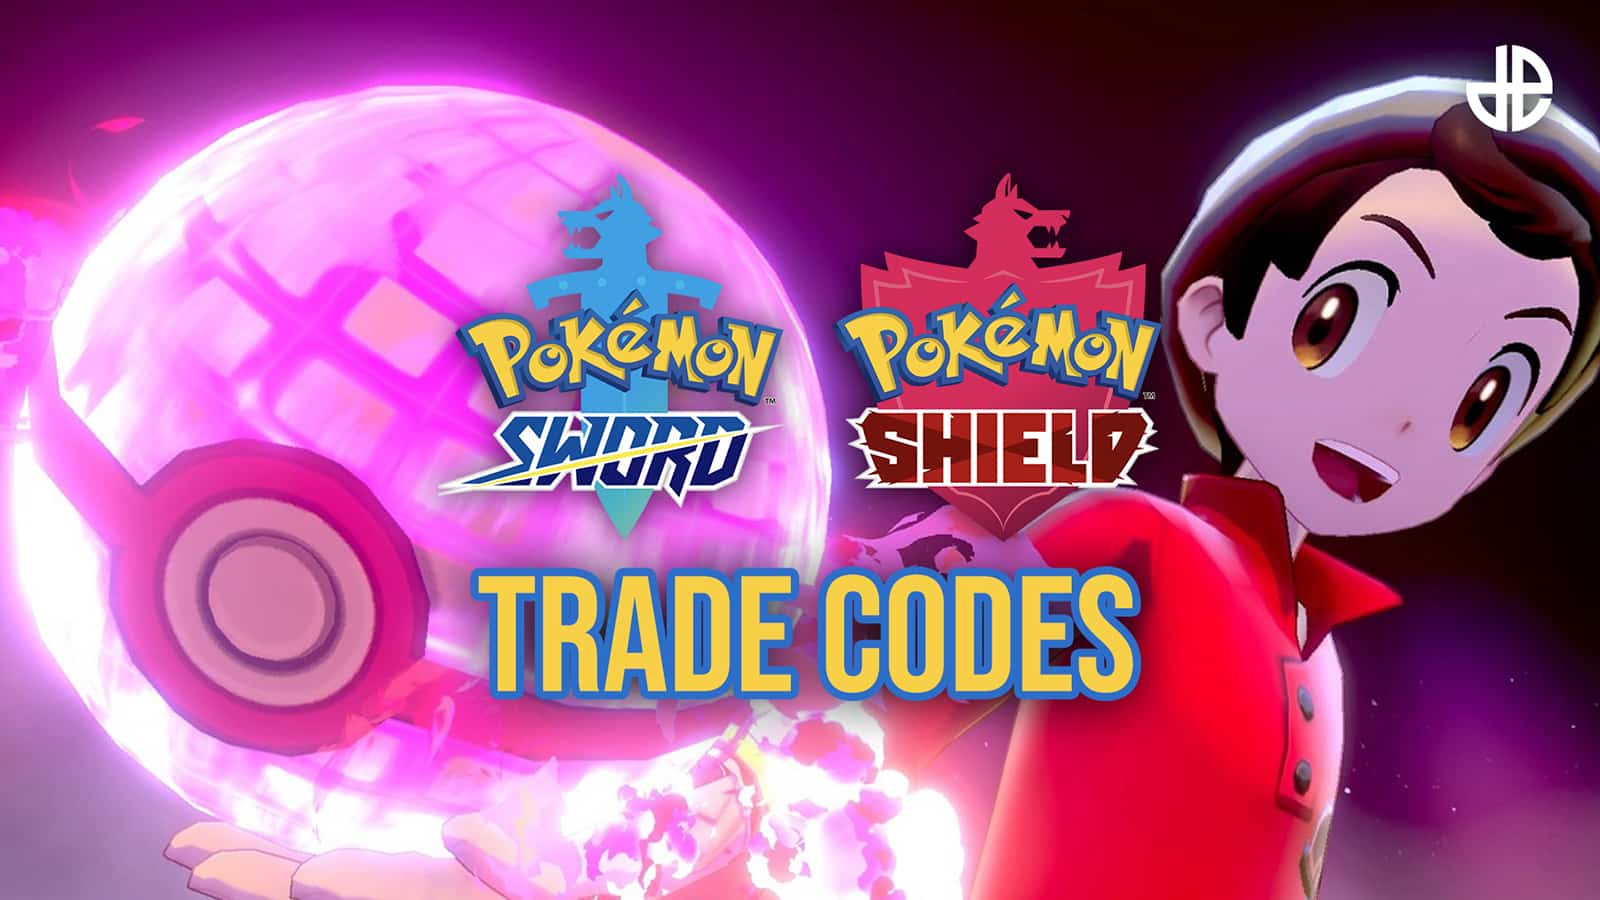 Pokémon Sword & Shield: What's Exclusive To Each Version?